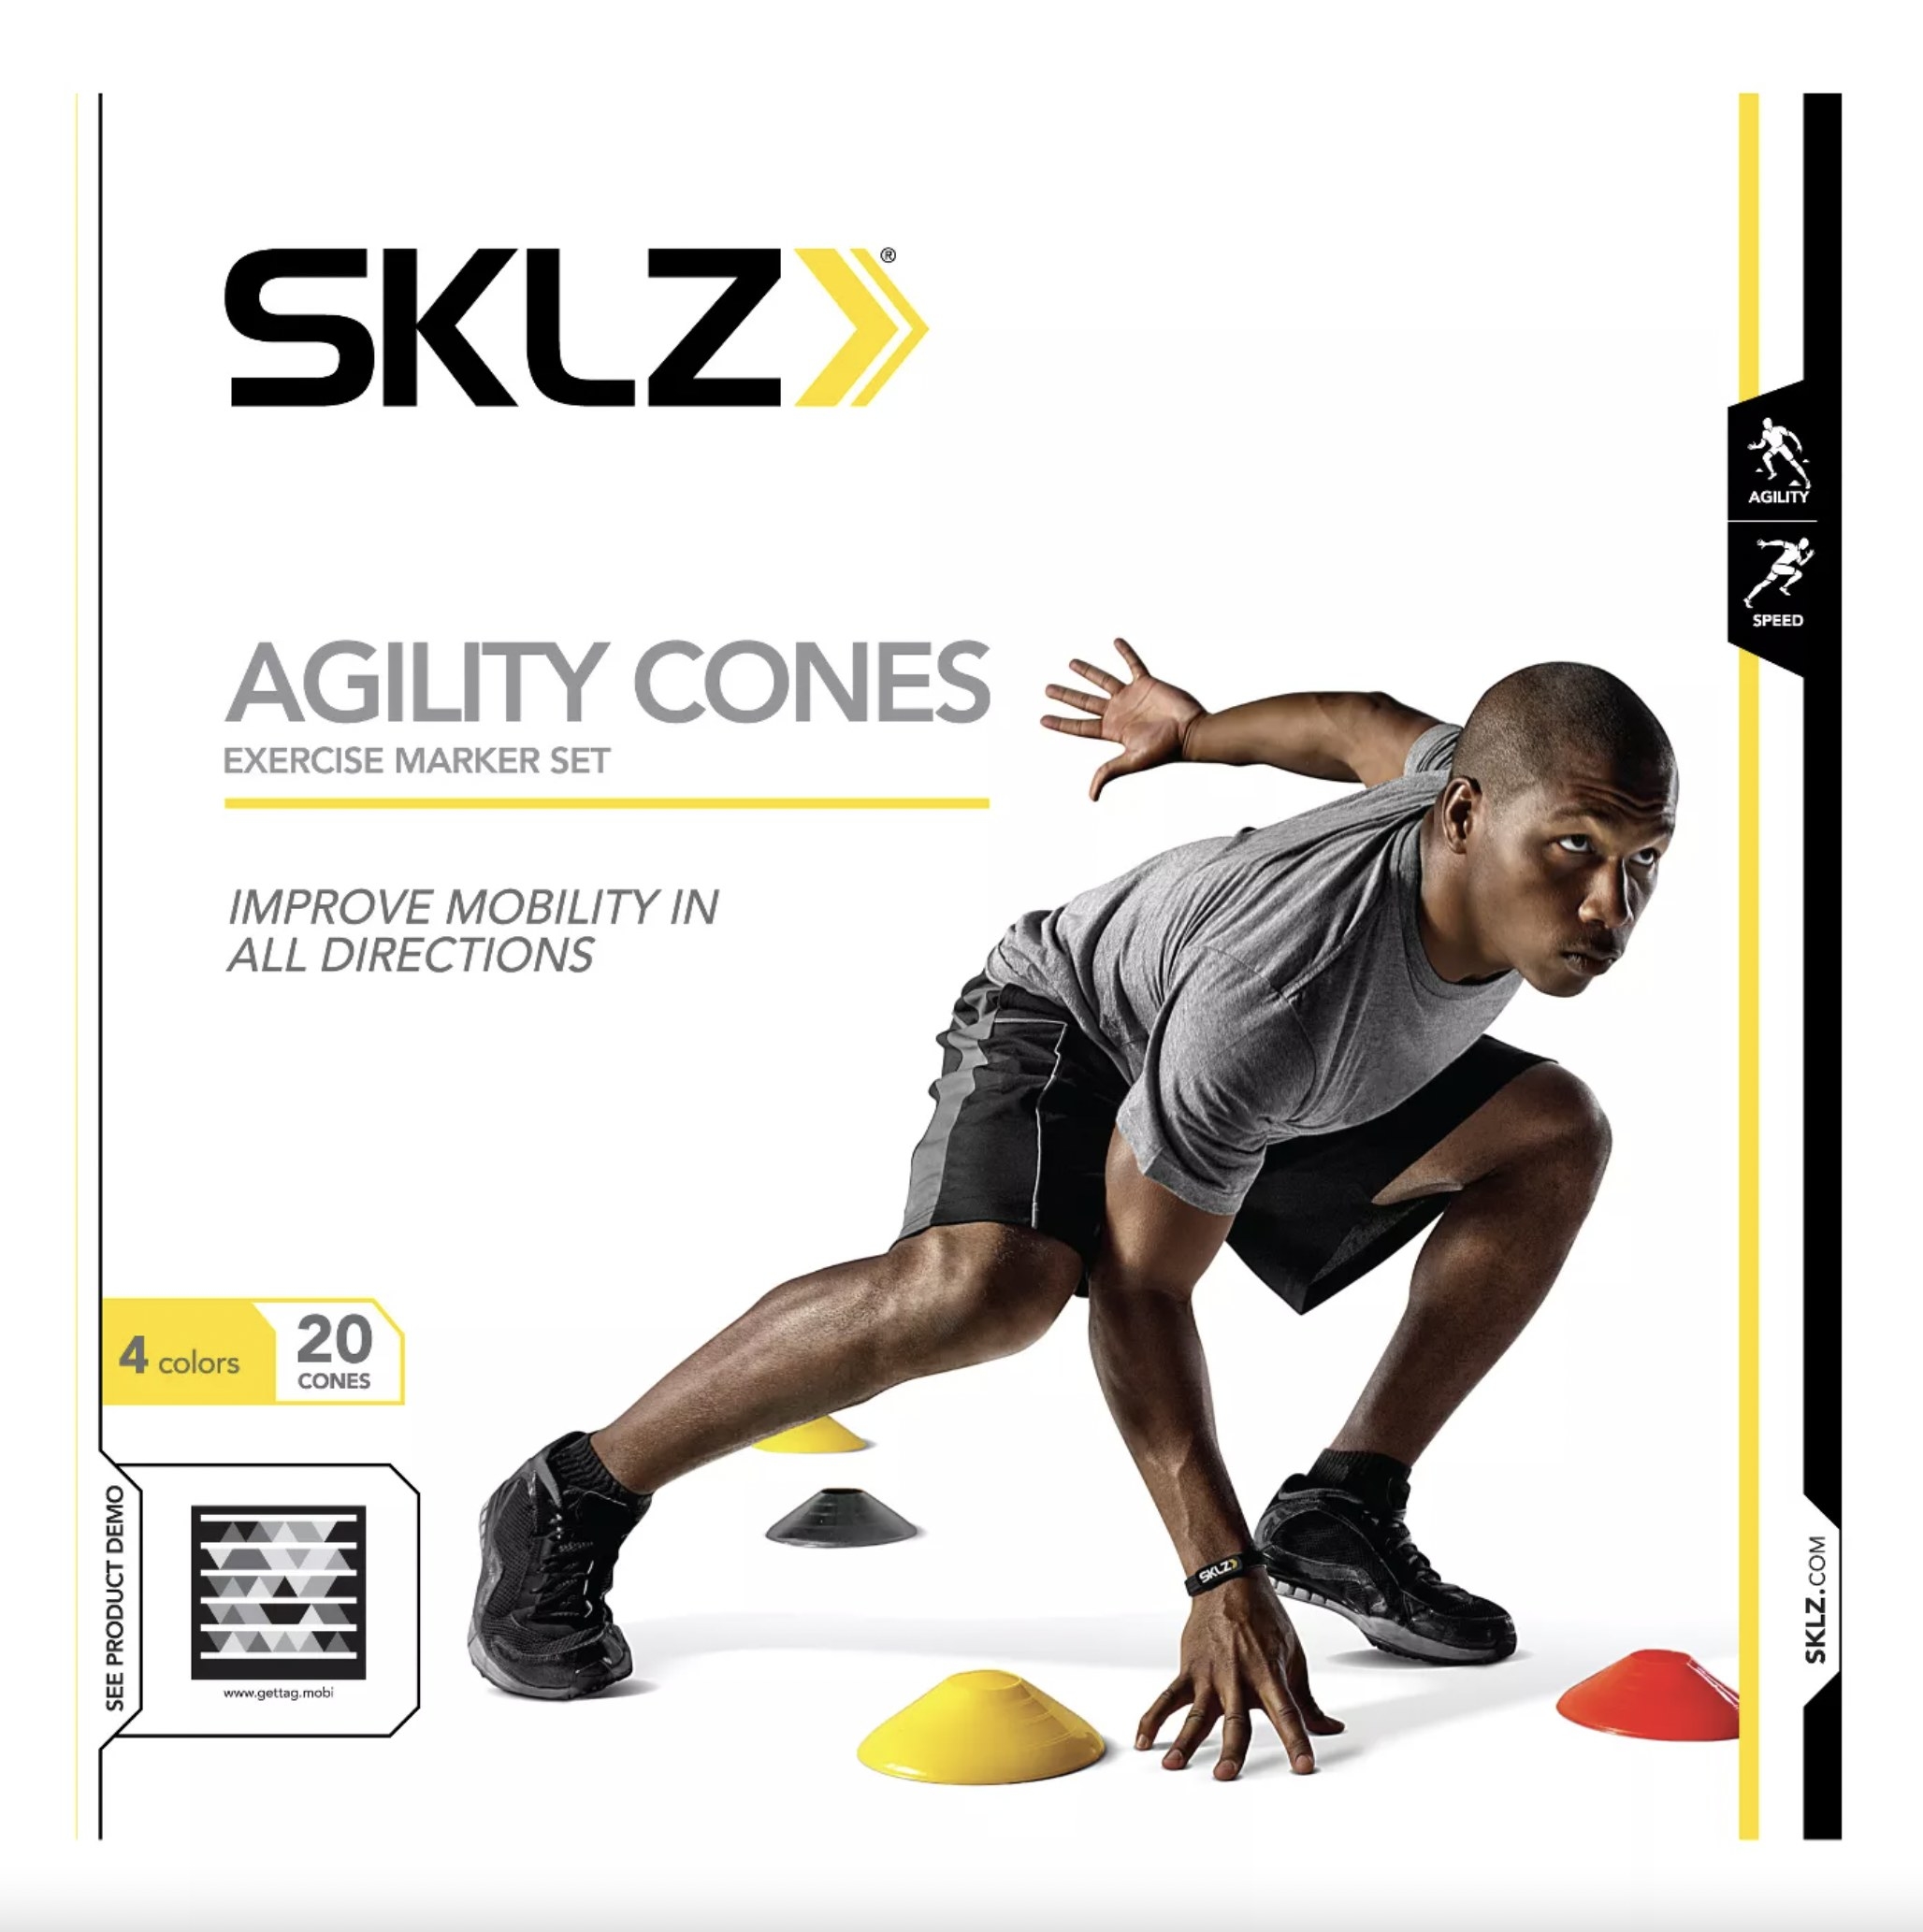 Man posing with agility cones